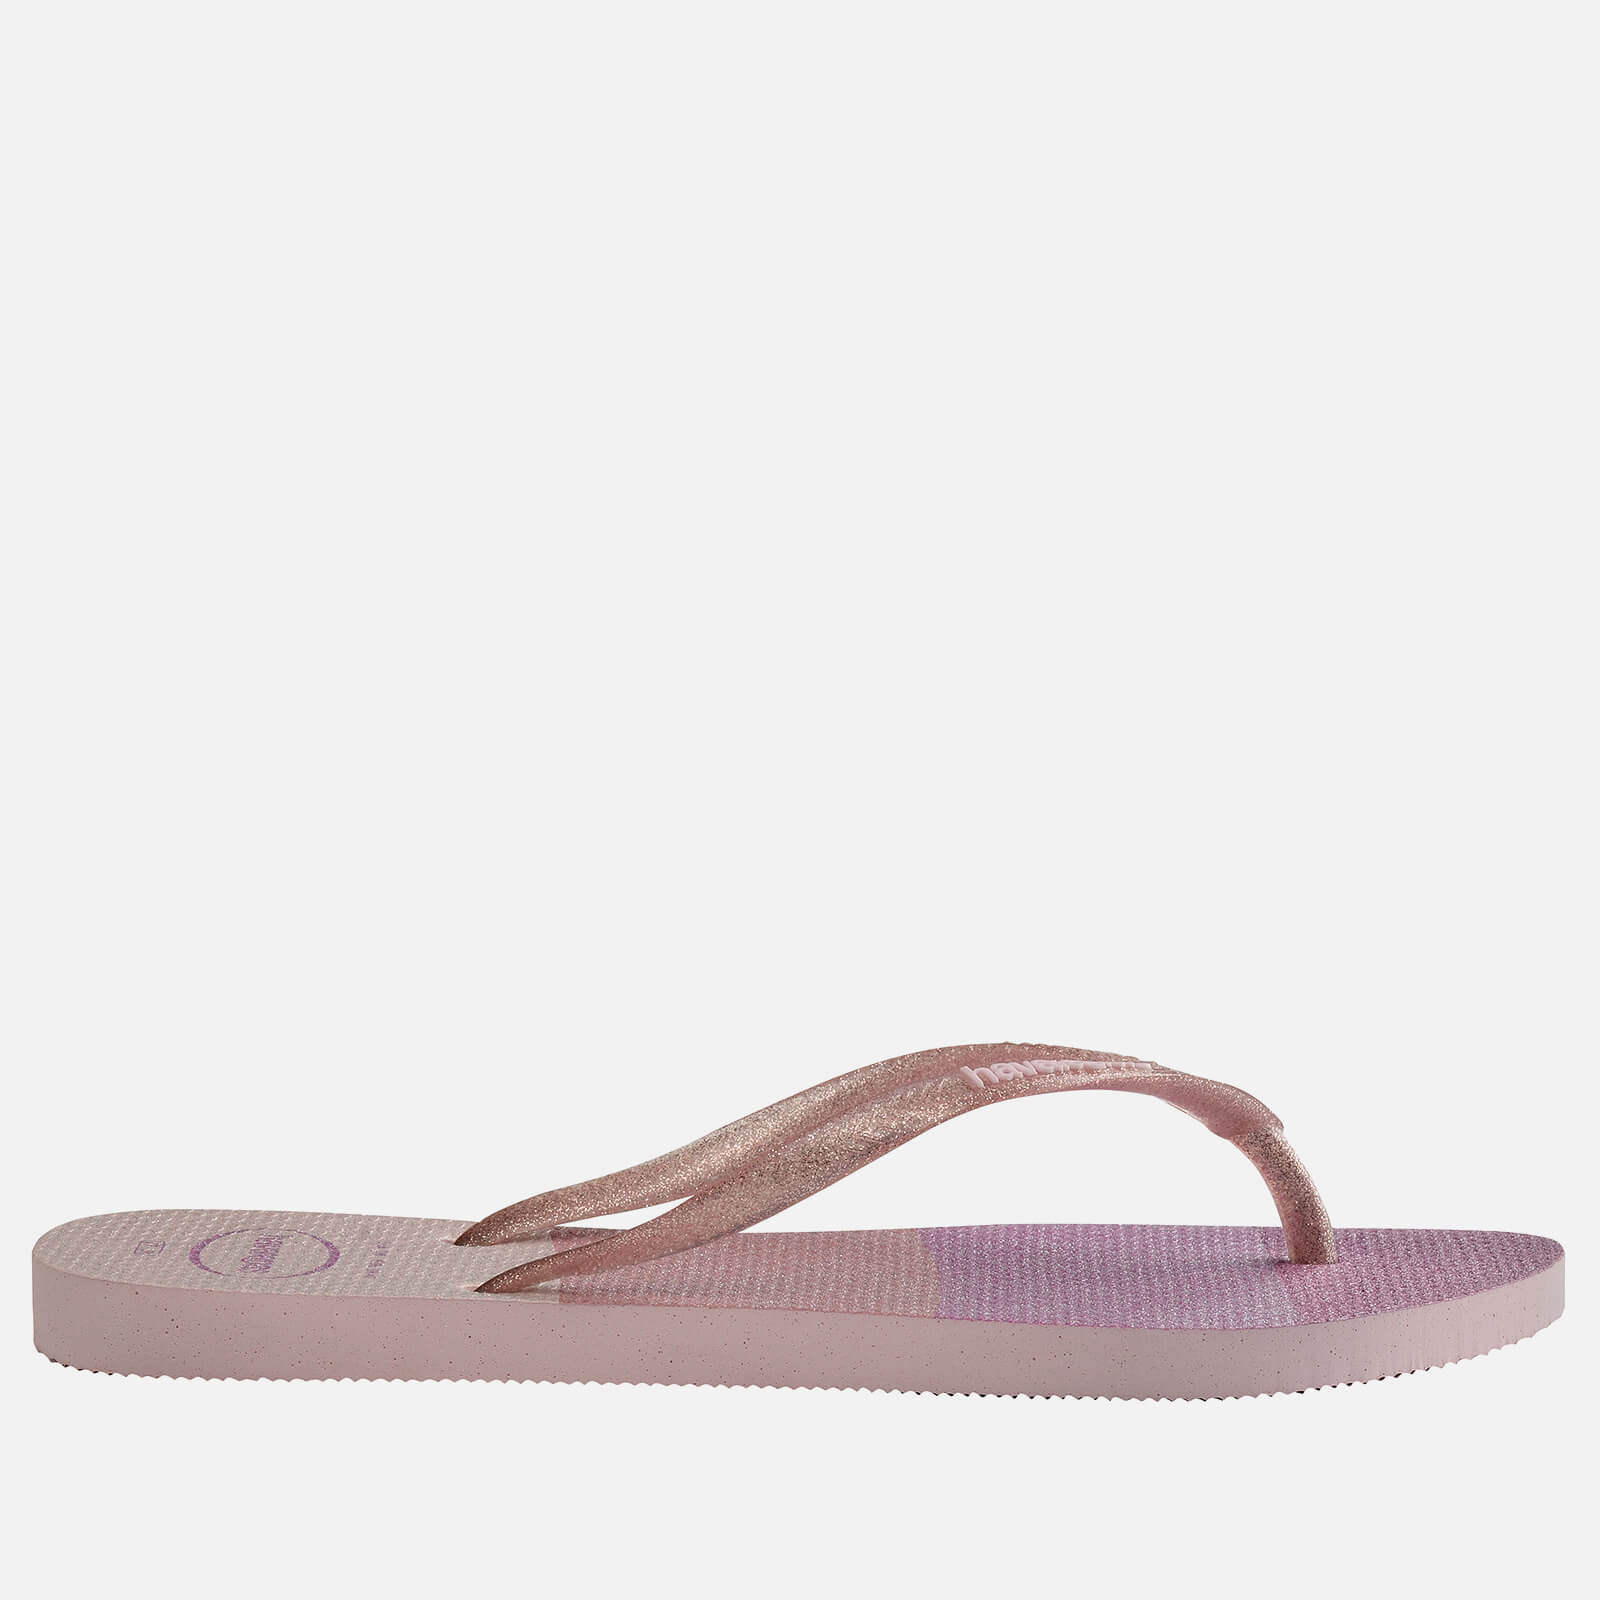 Havaianas Women's Slim Palette Glow Flip Flops - Candy Pink - UK 3/UK 4